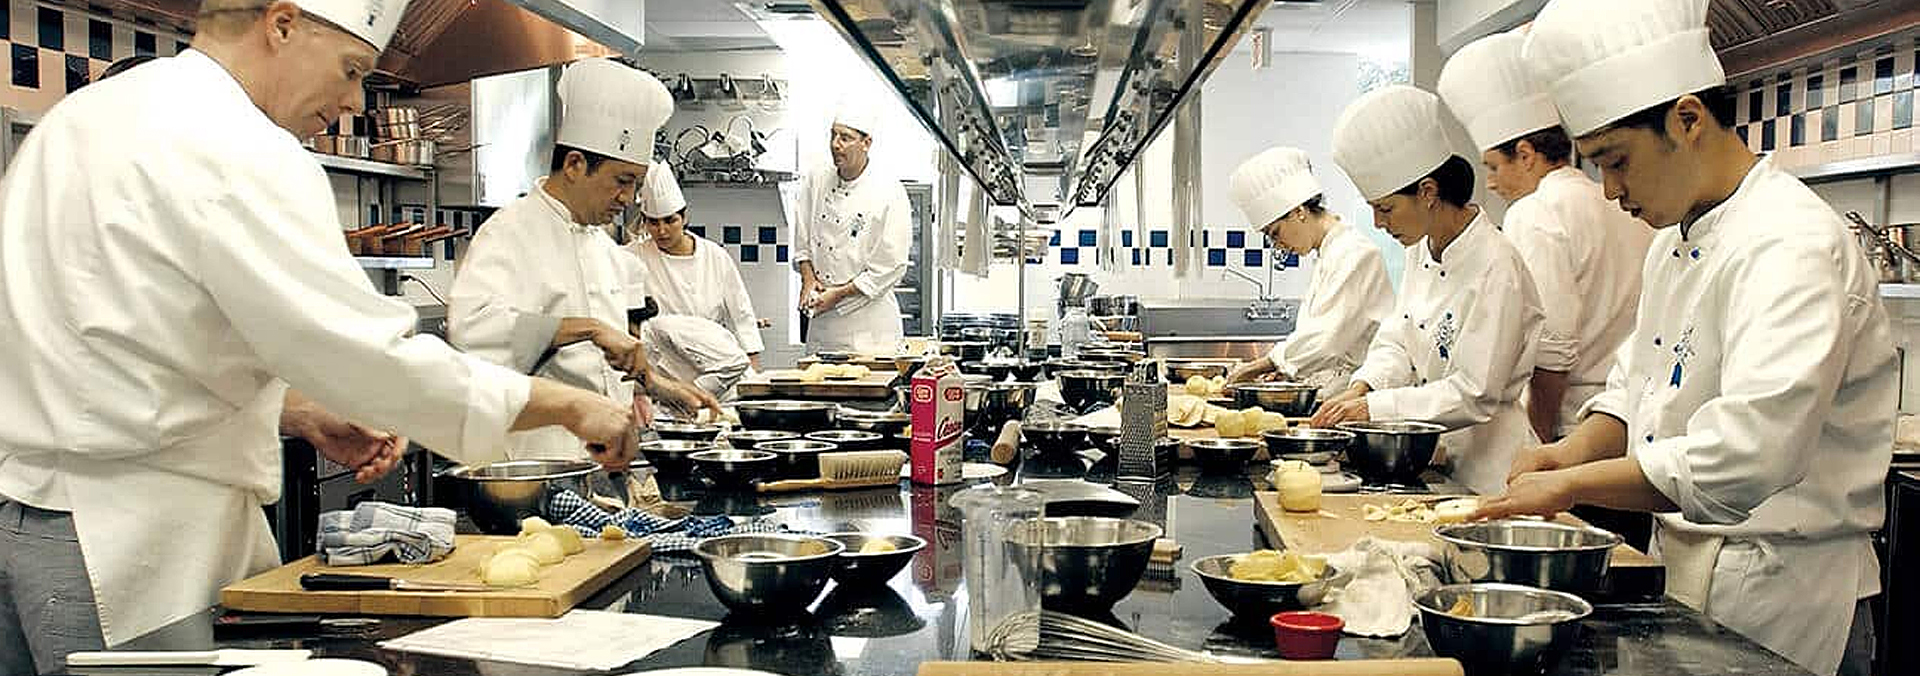 Culinary Arts Program starts Fall 2021!